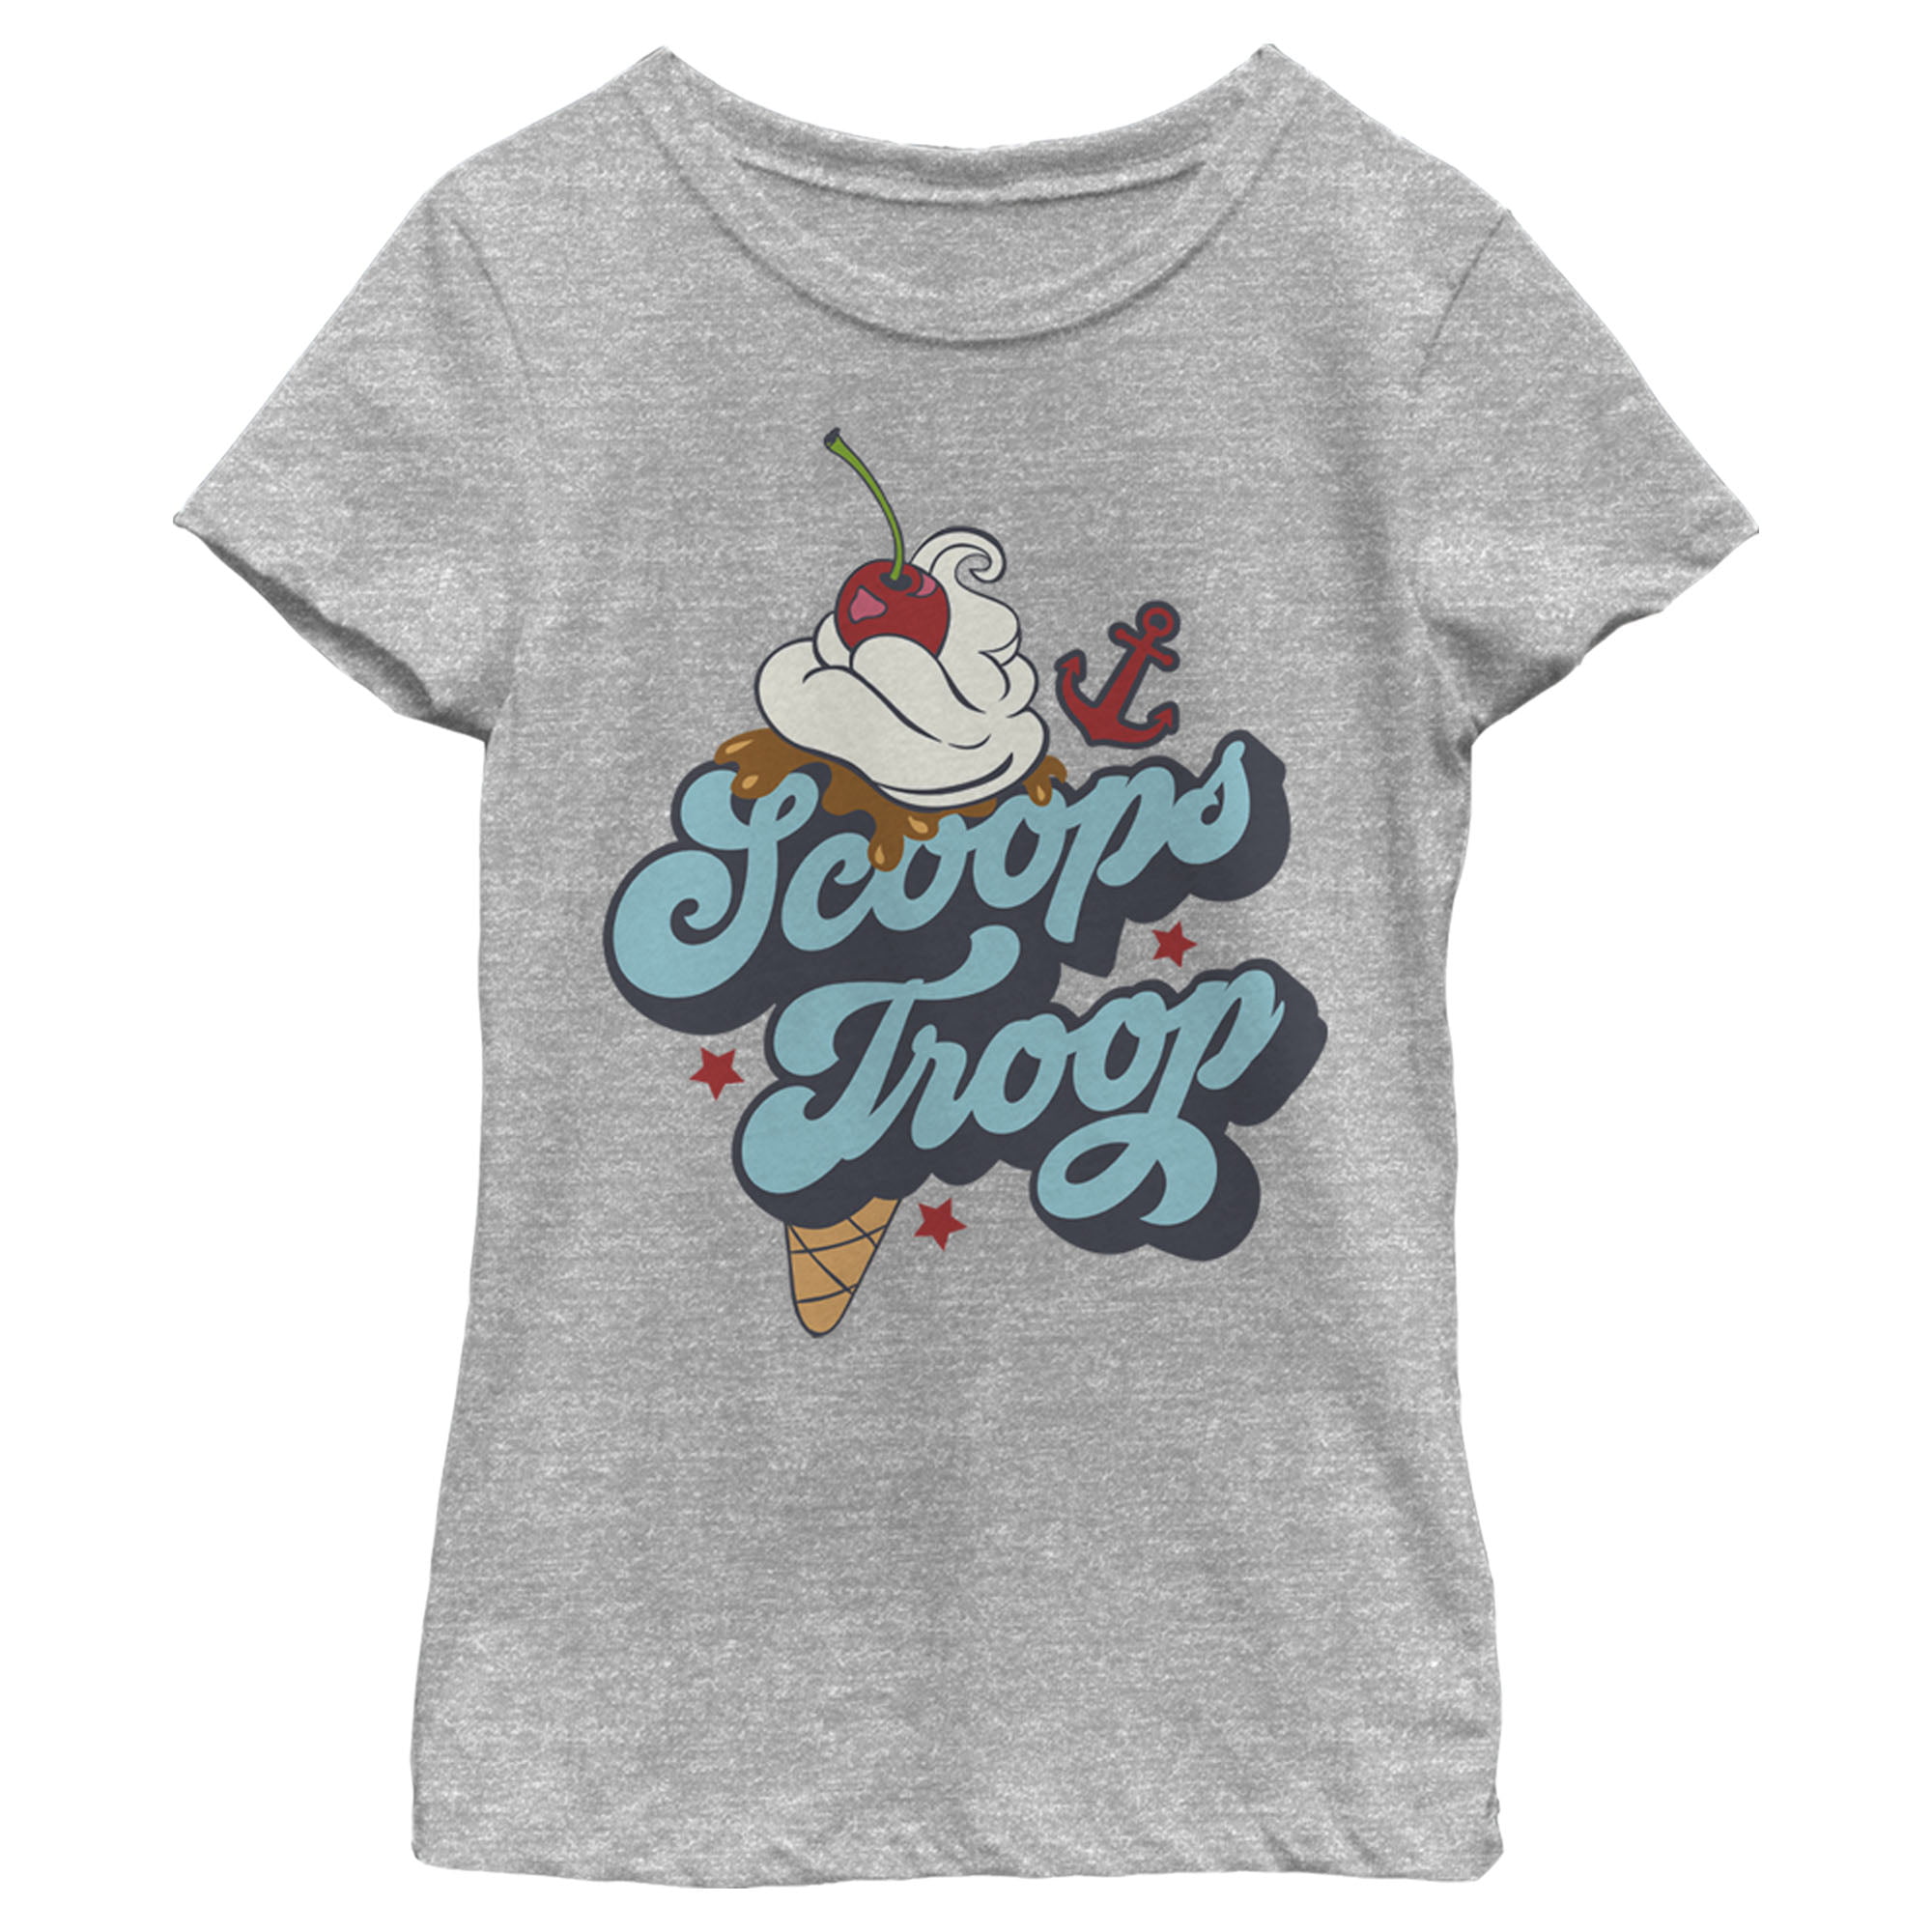 Stranger Things Girls' Scoops Troop Ice Cream T-Shirt - Walmart.com ...